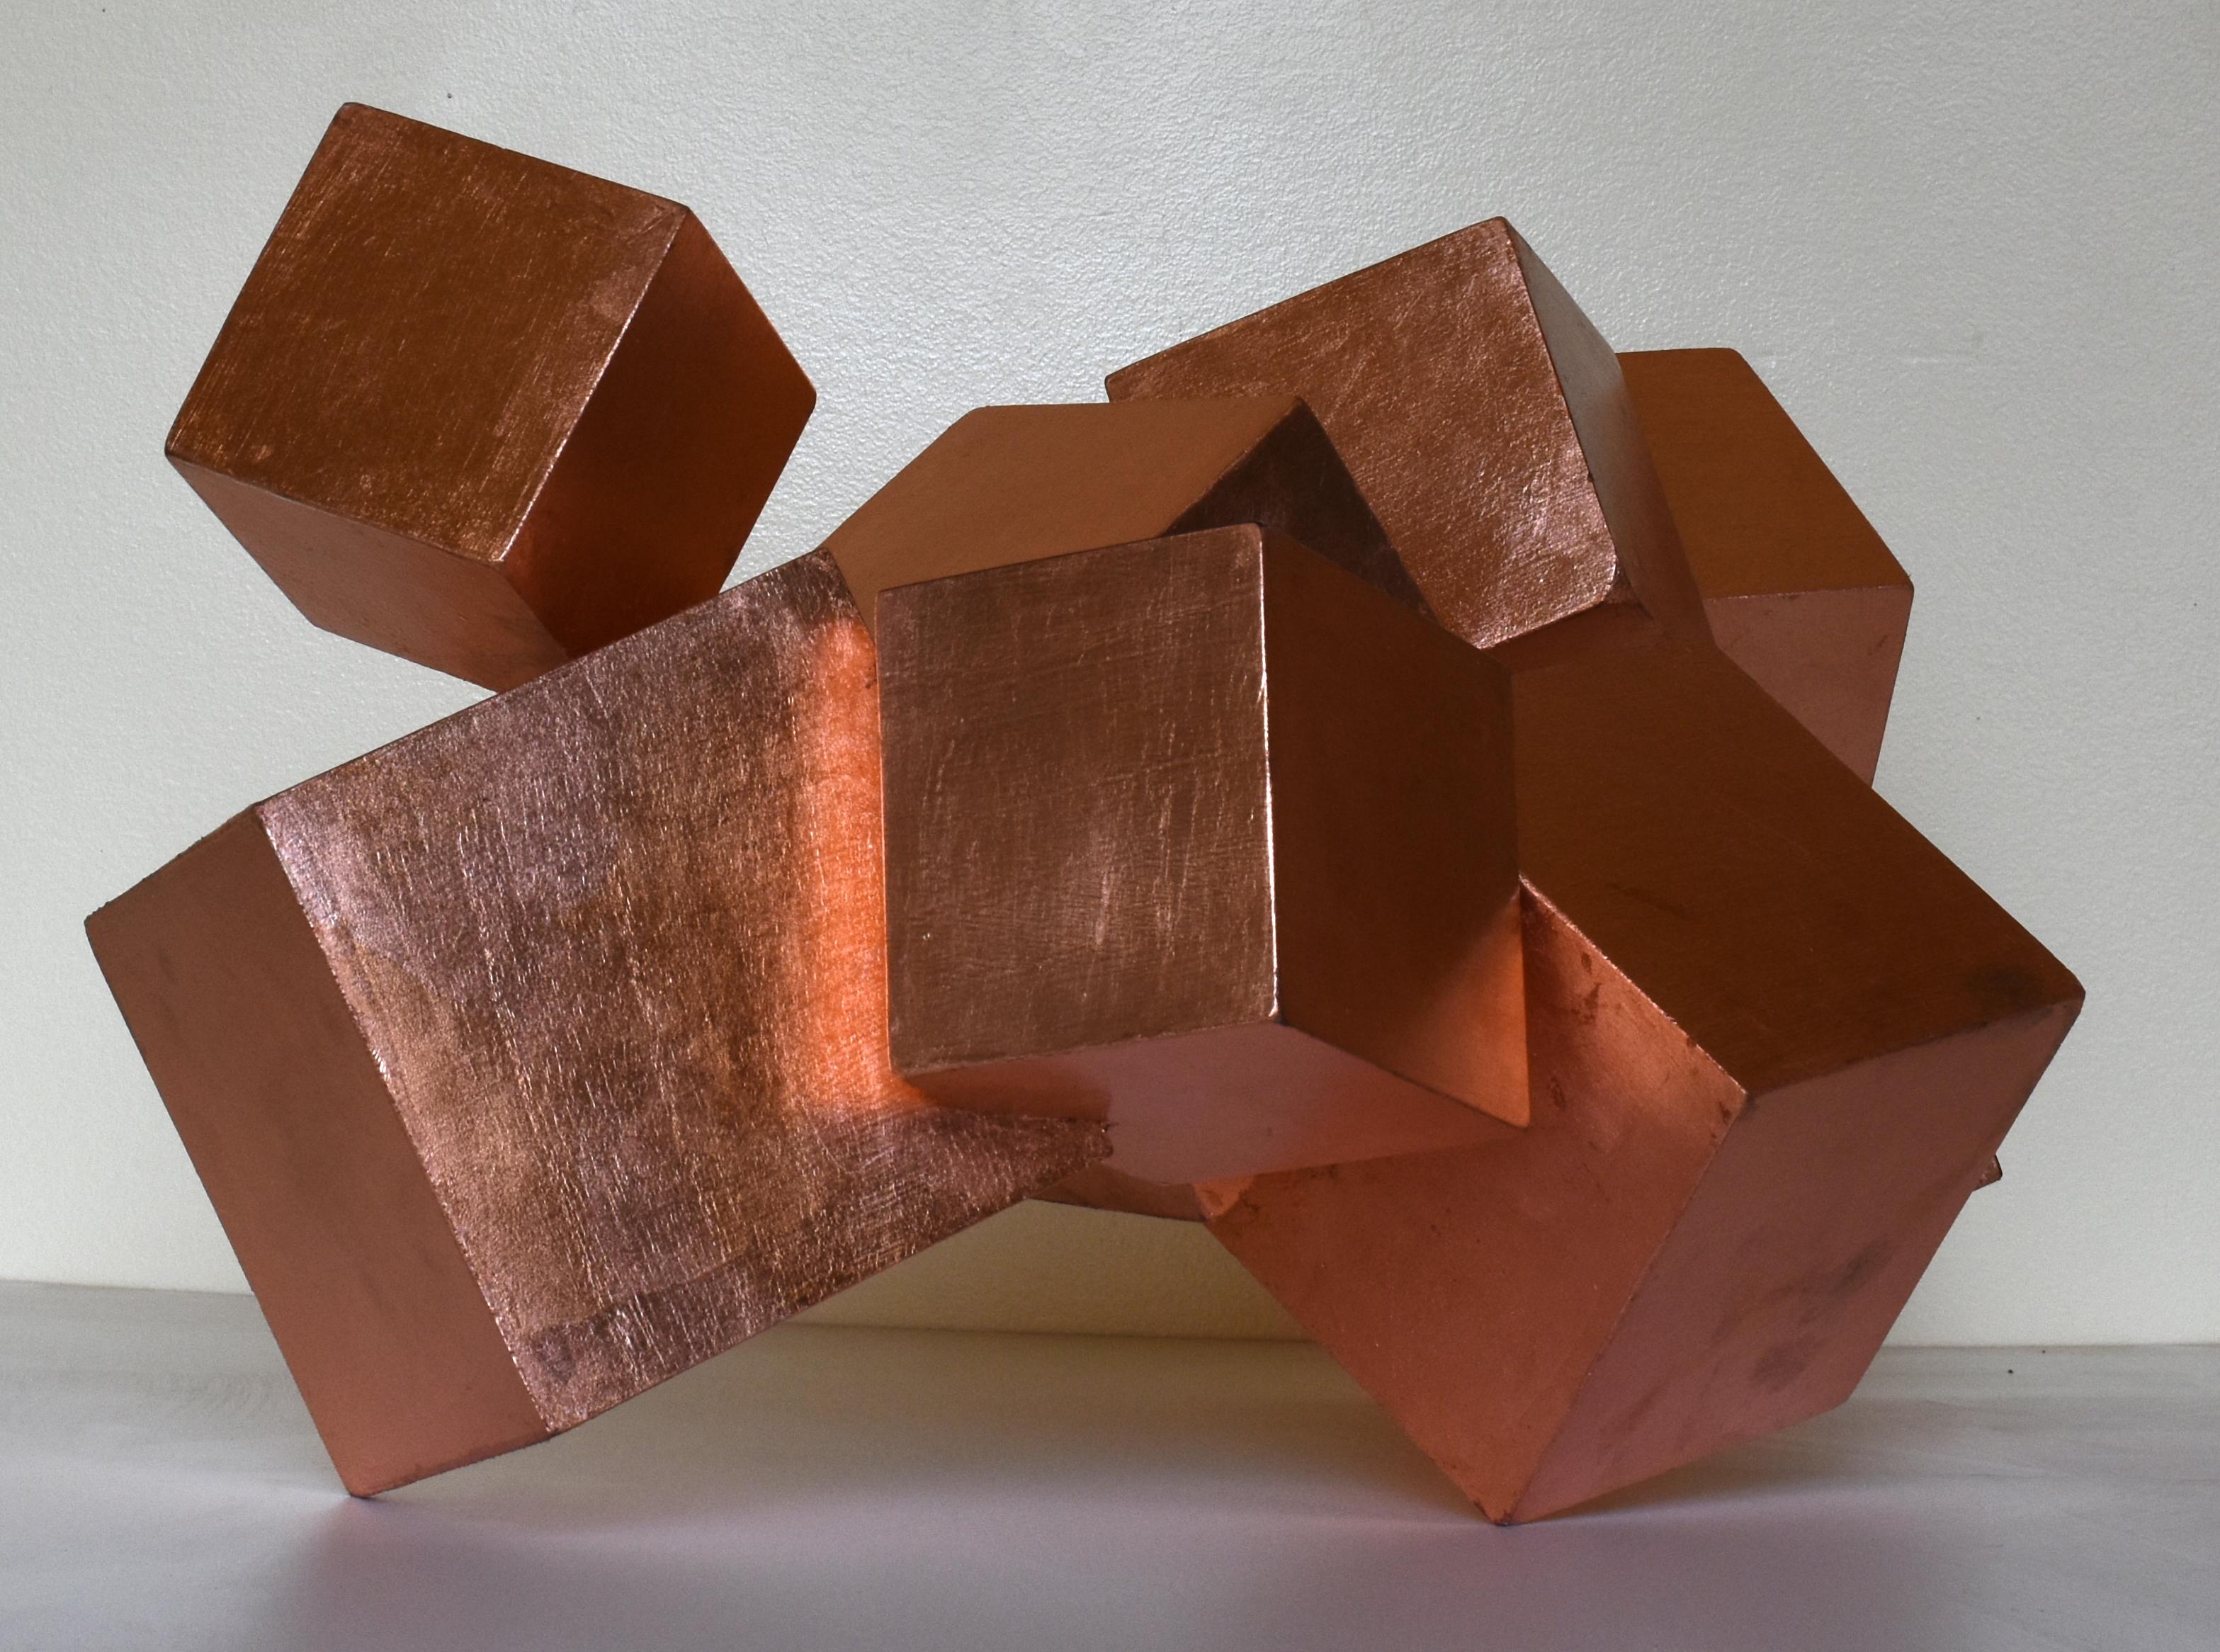 Copper and Mahogany Pyrite (exotic wood, metallic, cubic, table top sculpture) 2